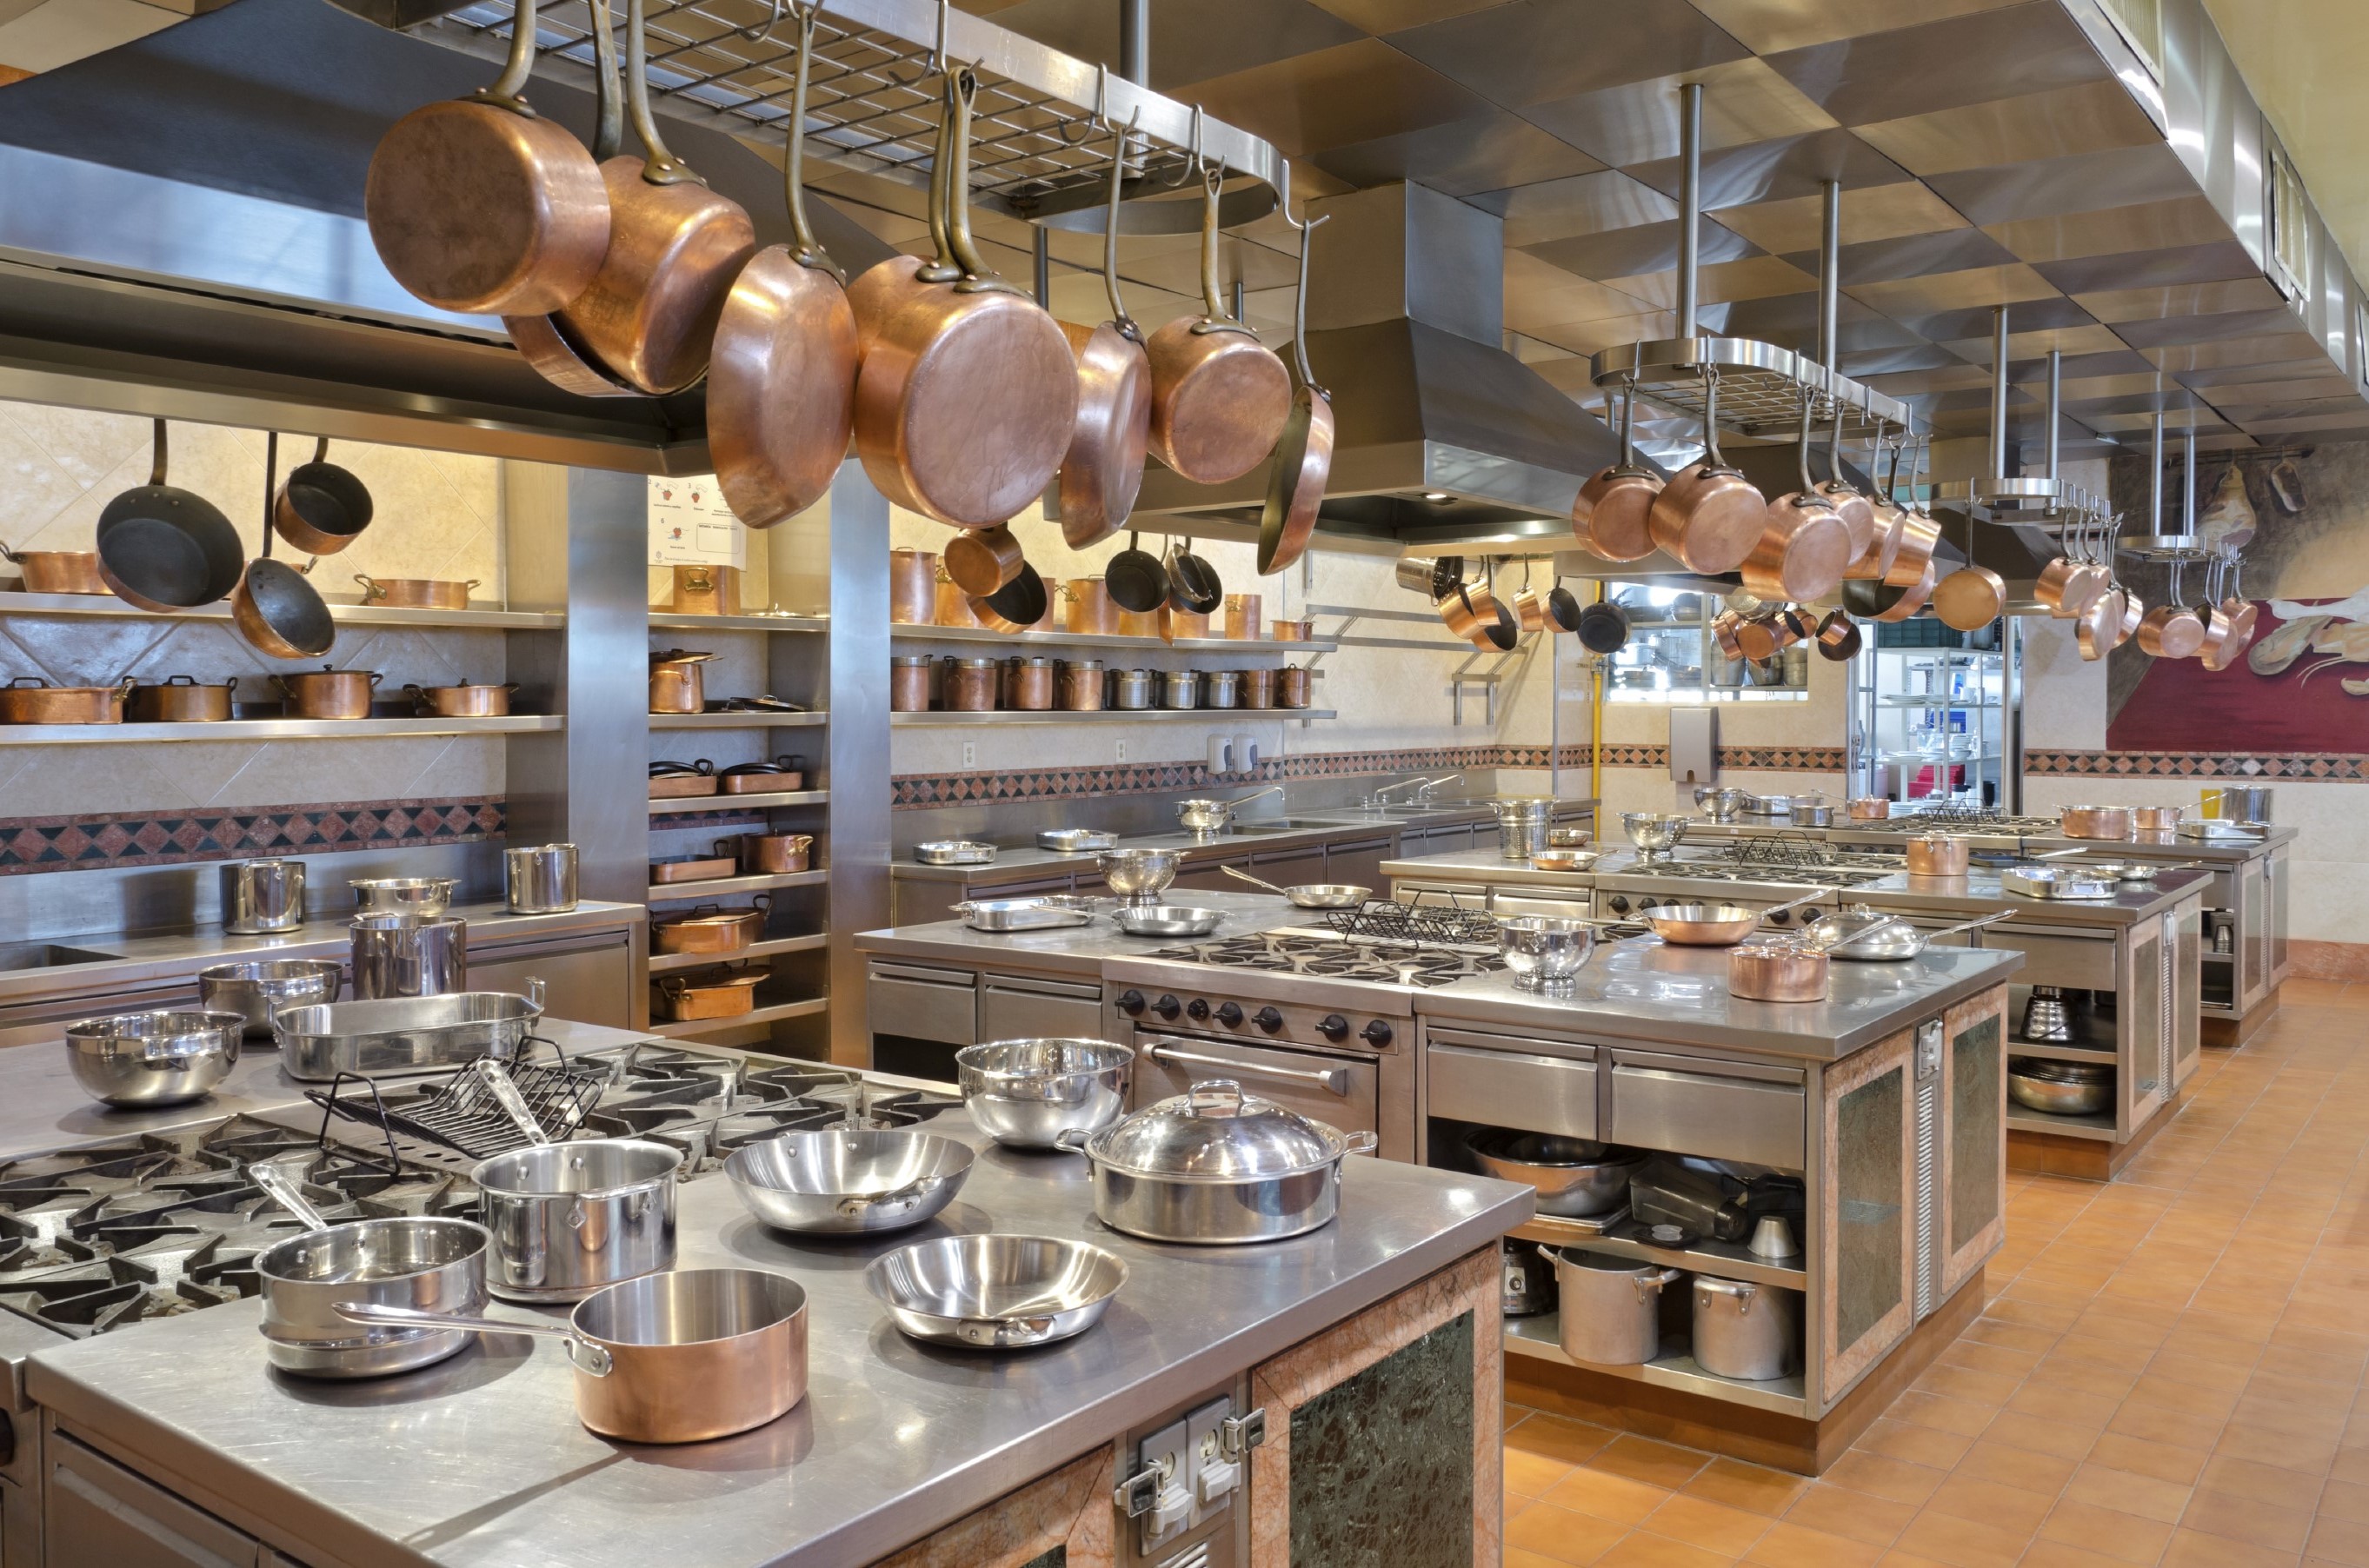 Kitchen & Restaurant Equipment Leading hospitality